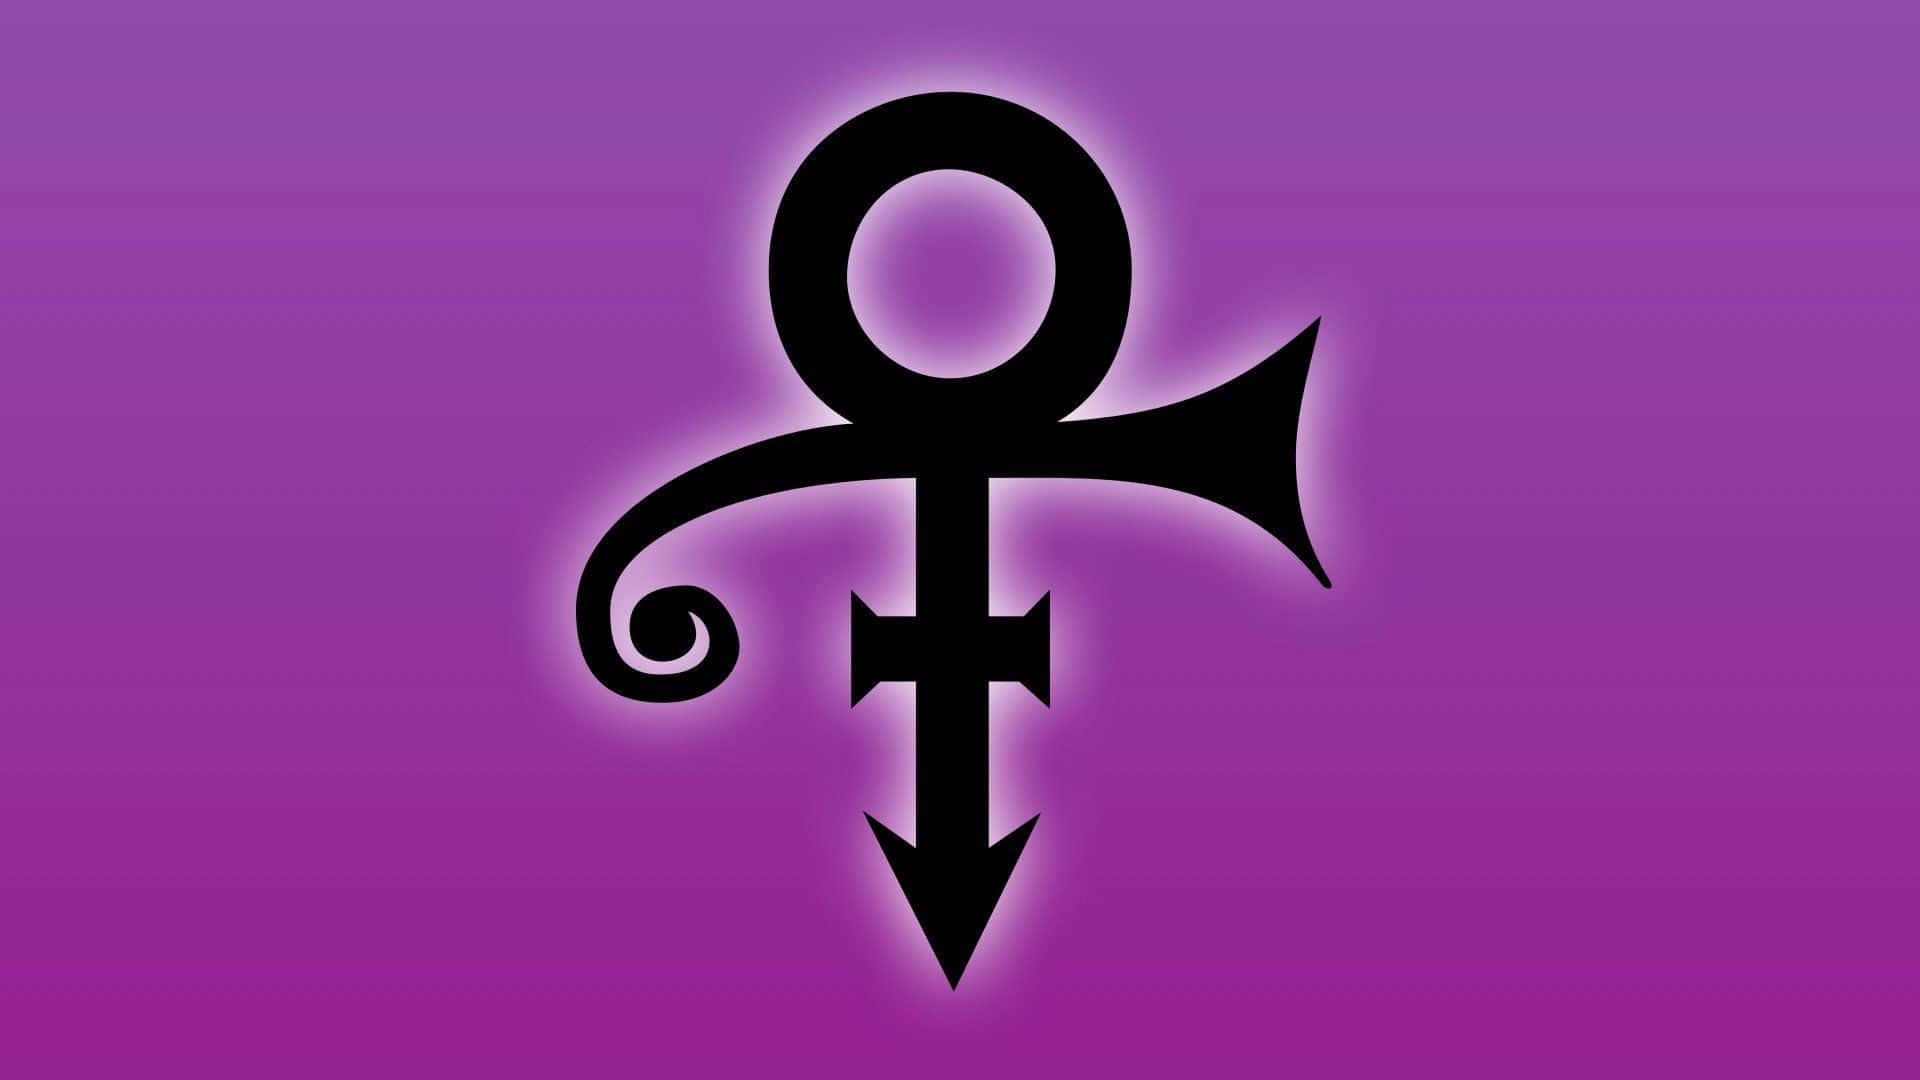 Prince Symbol Black Cross Wallpaper